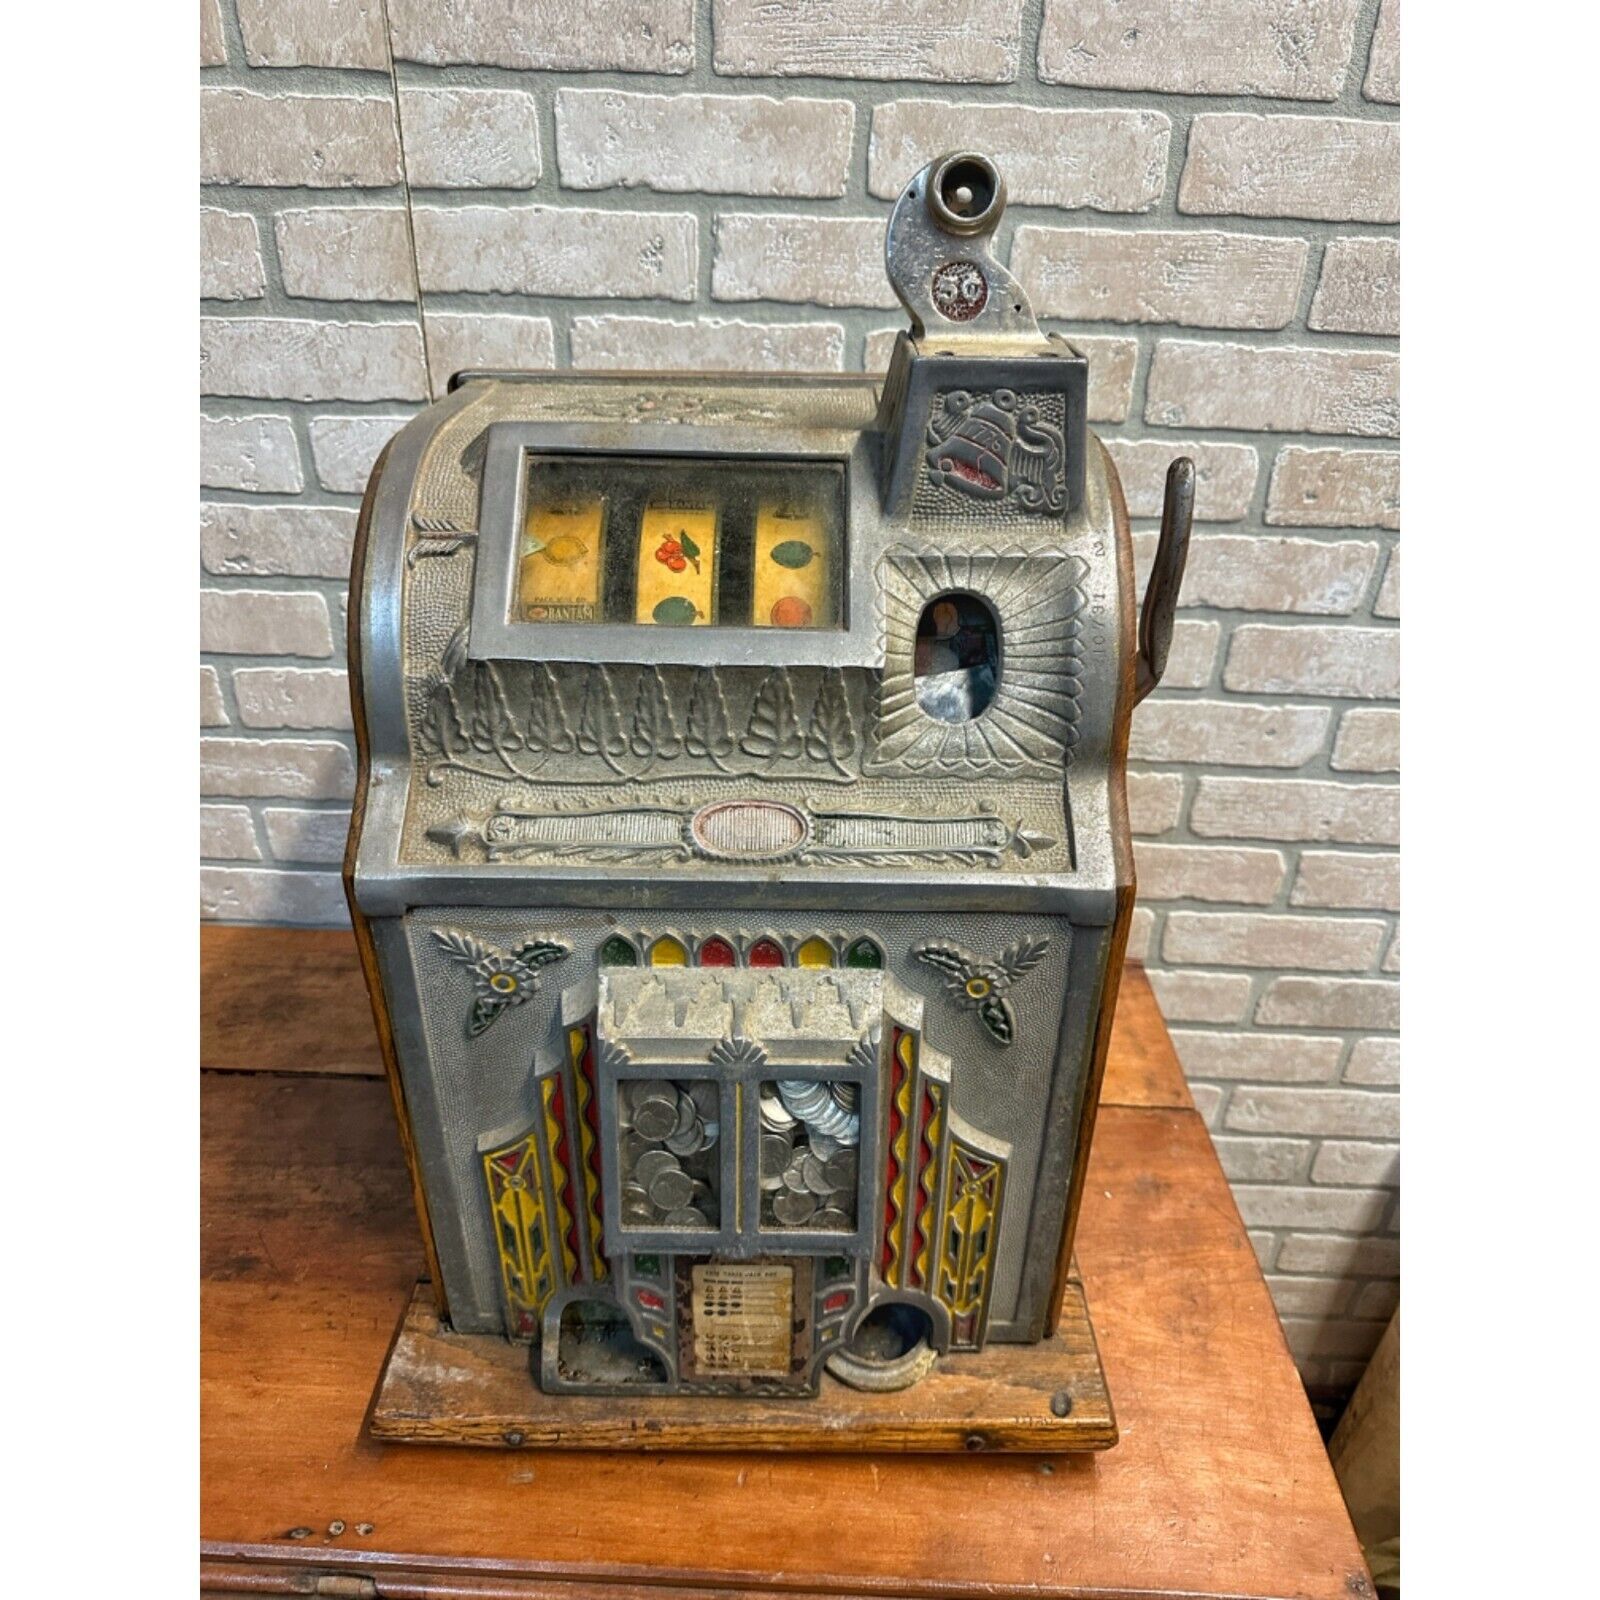 Antique c1910s Mills Nickel Coin-op Gambiling Slot Machine for Parts / Repair